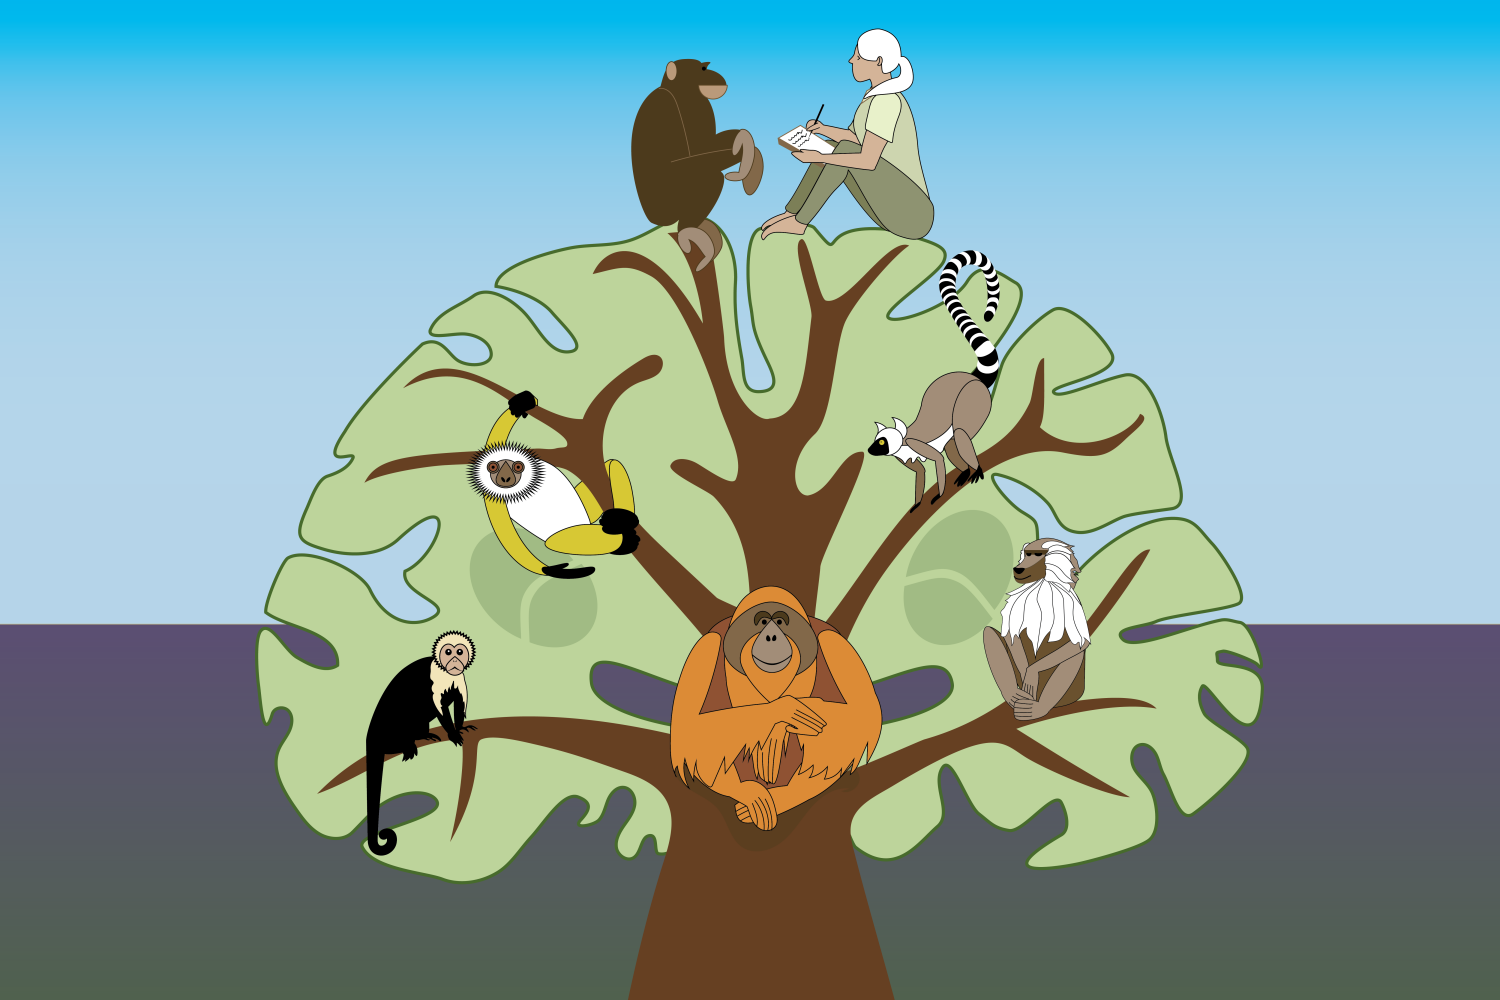 human evolution tree of life